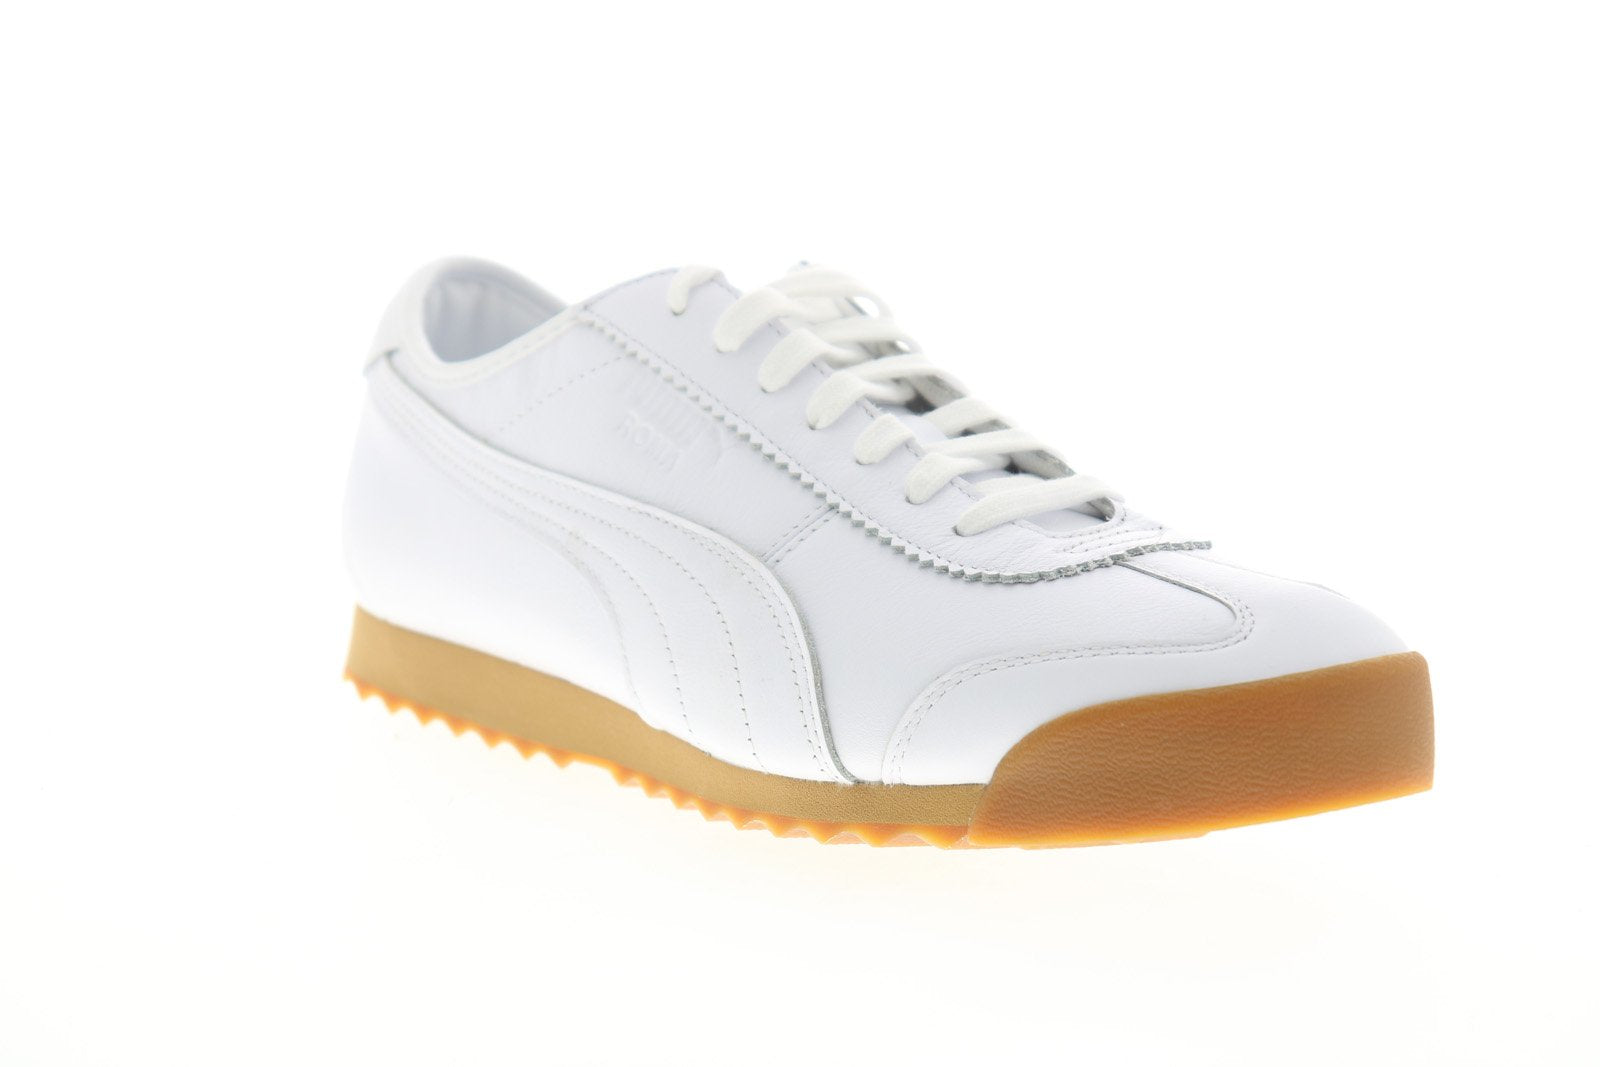 Puma Roma Kitsune 38022301 Mens White Leather Lifestyle Sneakers Shoes